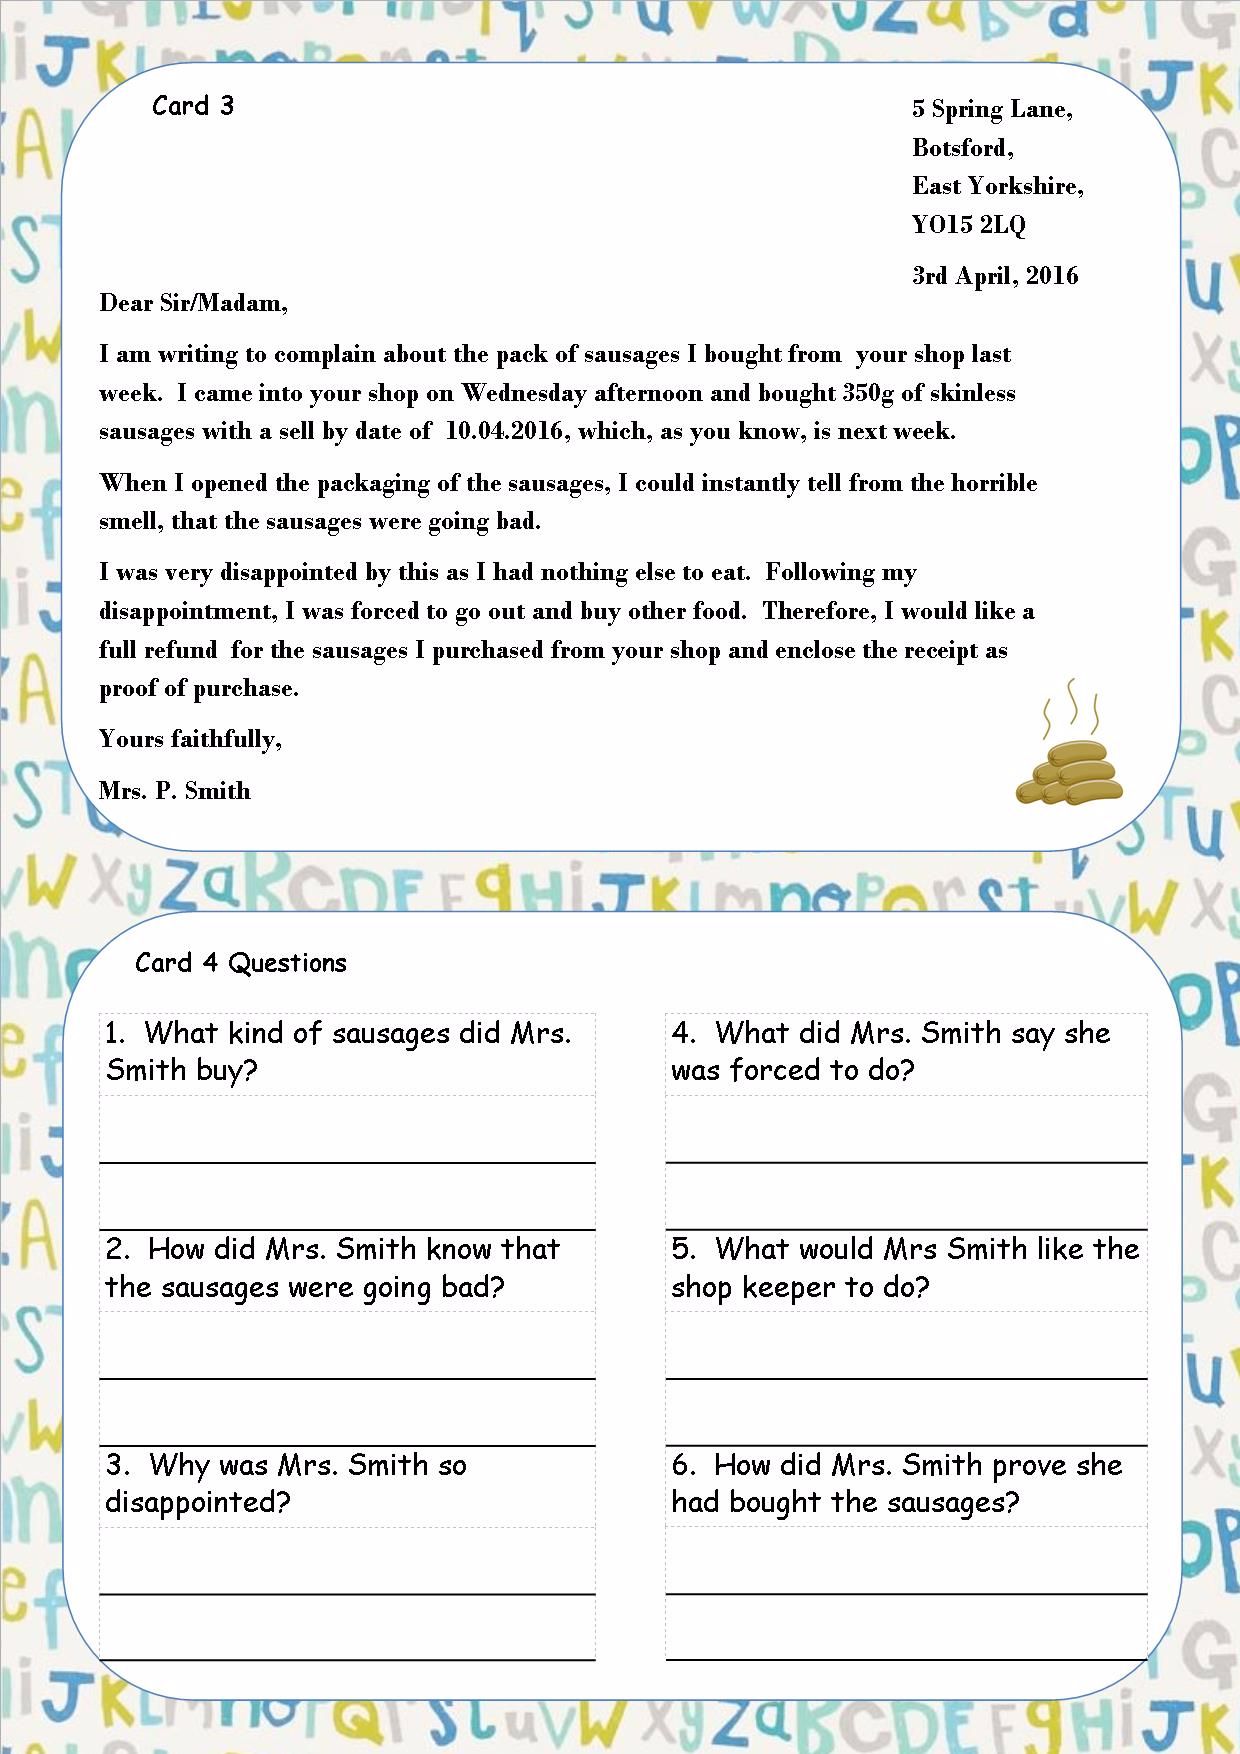 KS1 KS2 SEN IPC Reading Comprehension Cards Guided Reading Writing Spelling